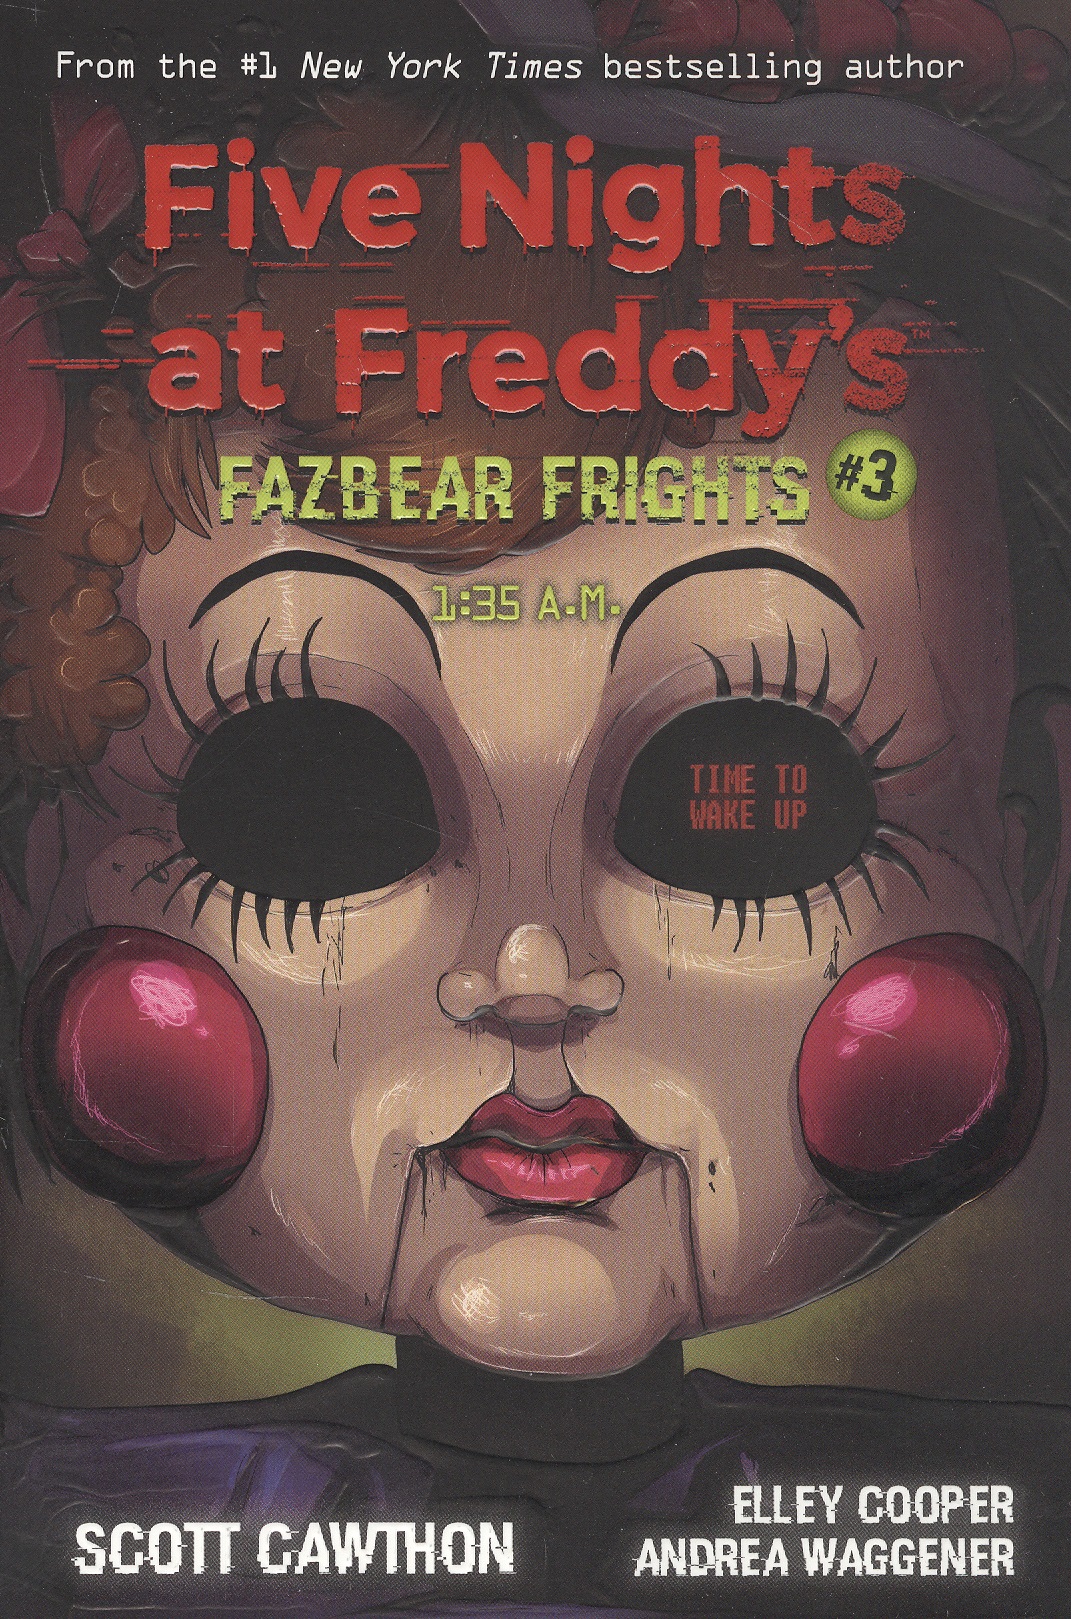 Five nights at freddys: Fazbear Frights #3. 1:35 A.M